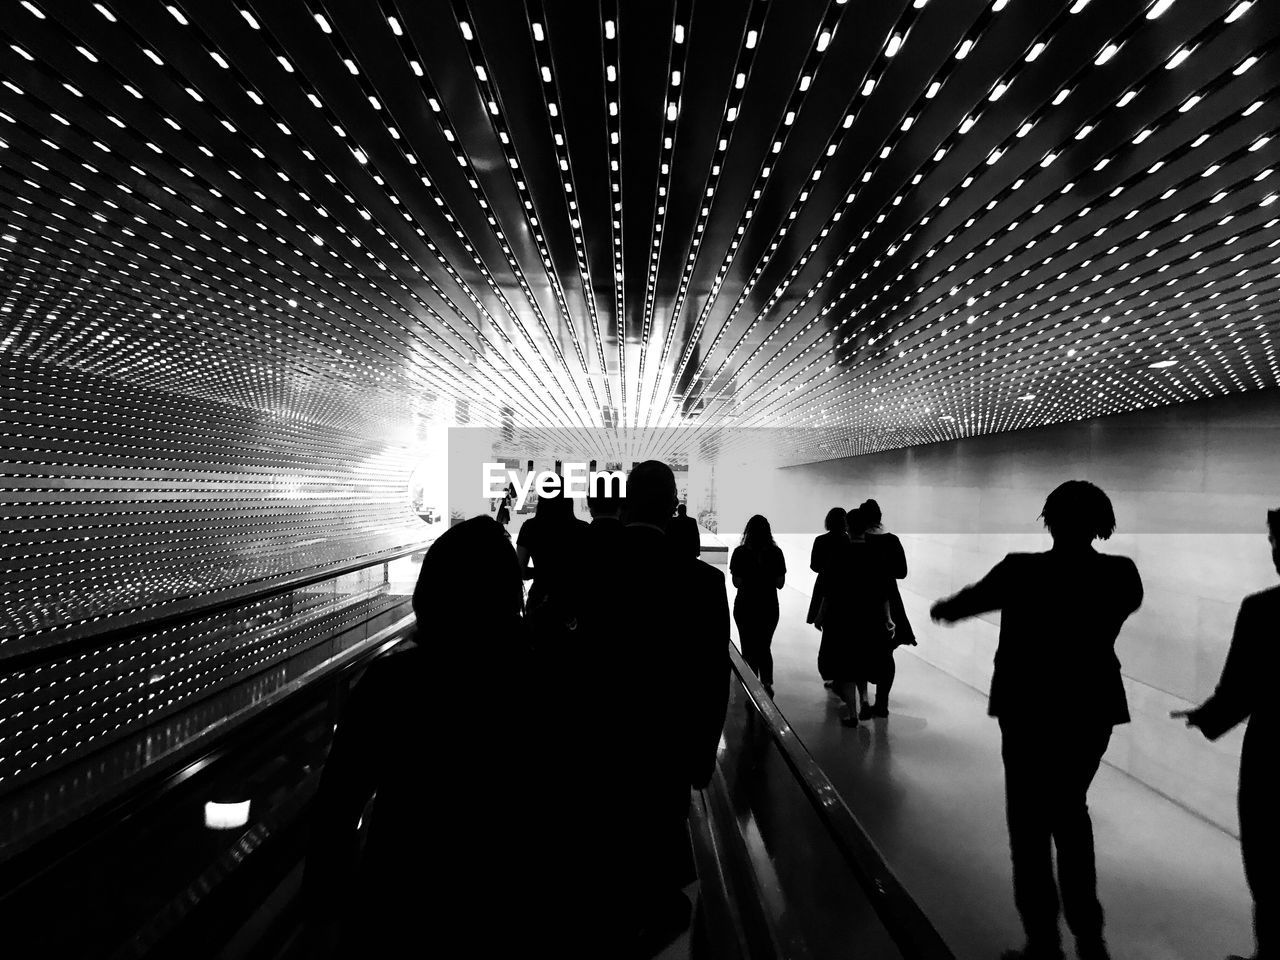 Silhouette people in illuminated tunnel